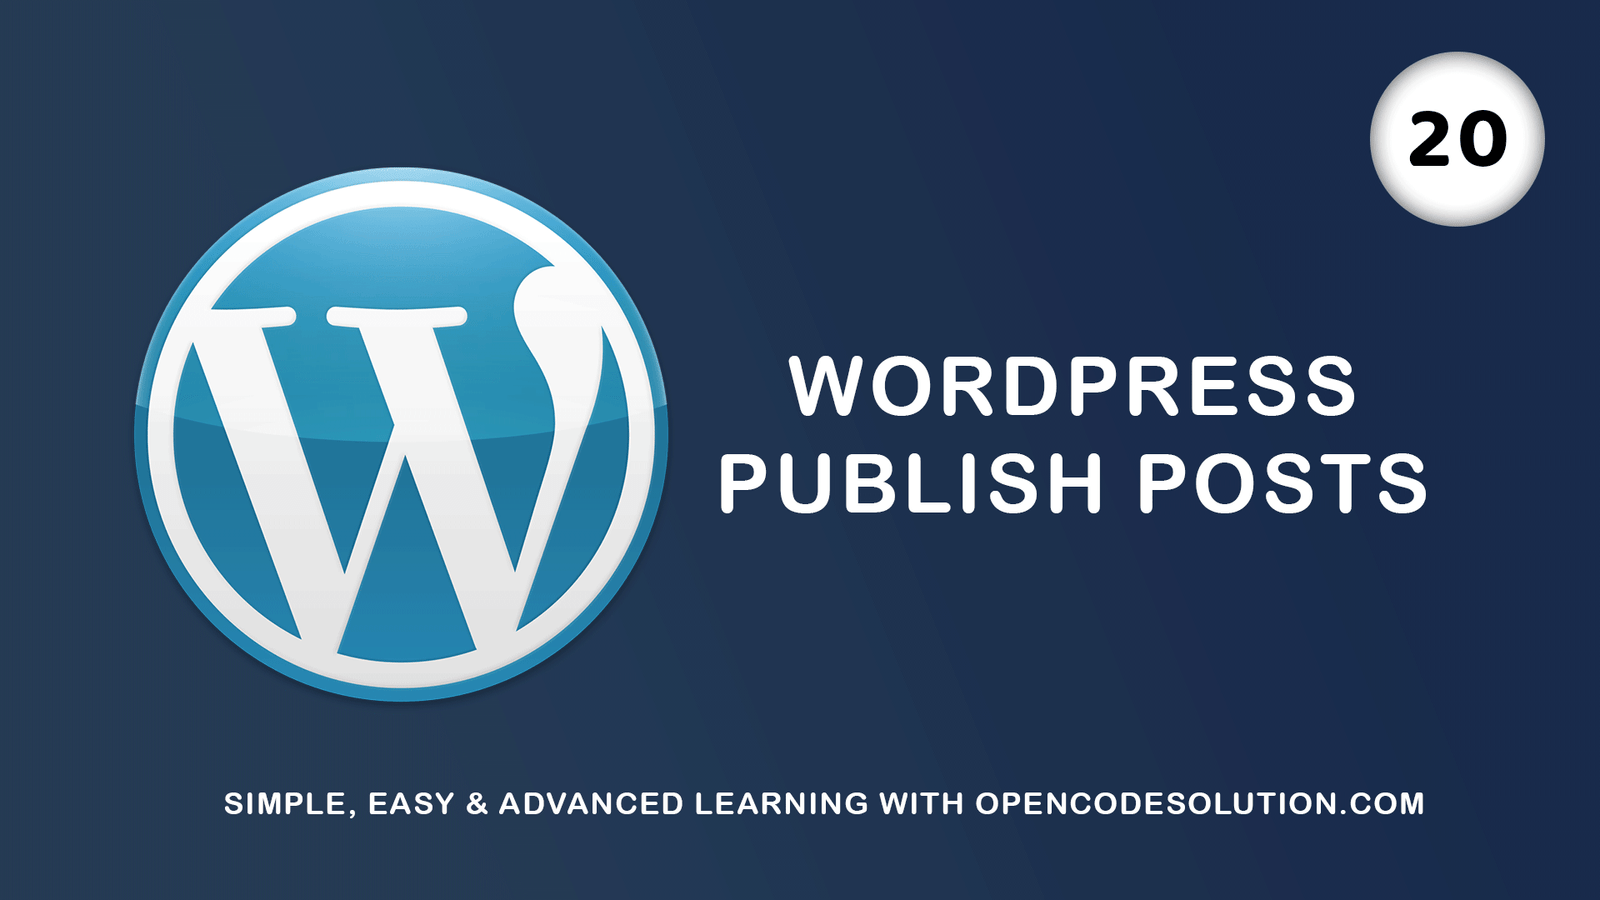 WordPress Publish Posts #20